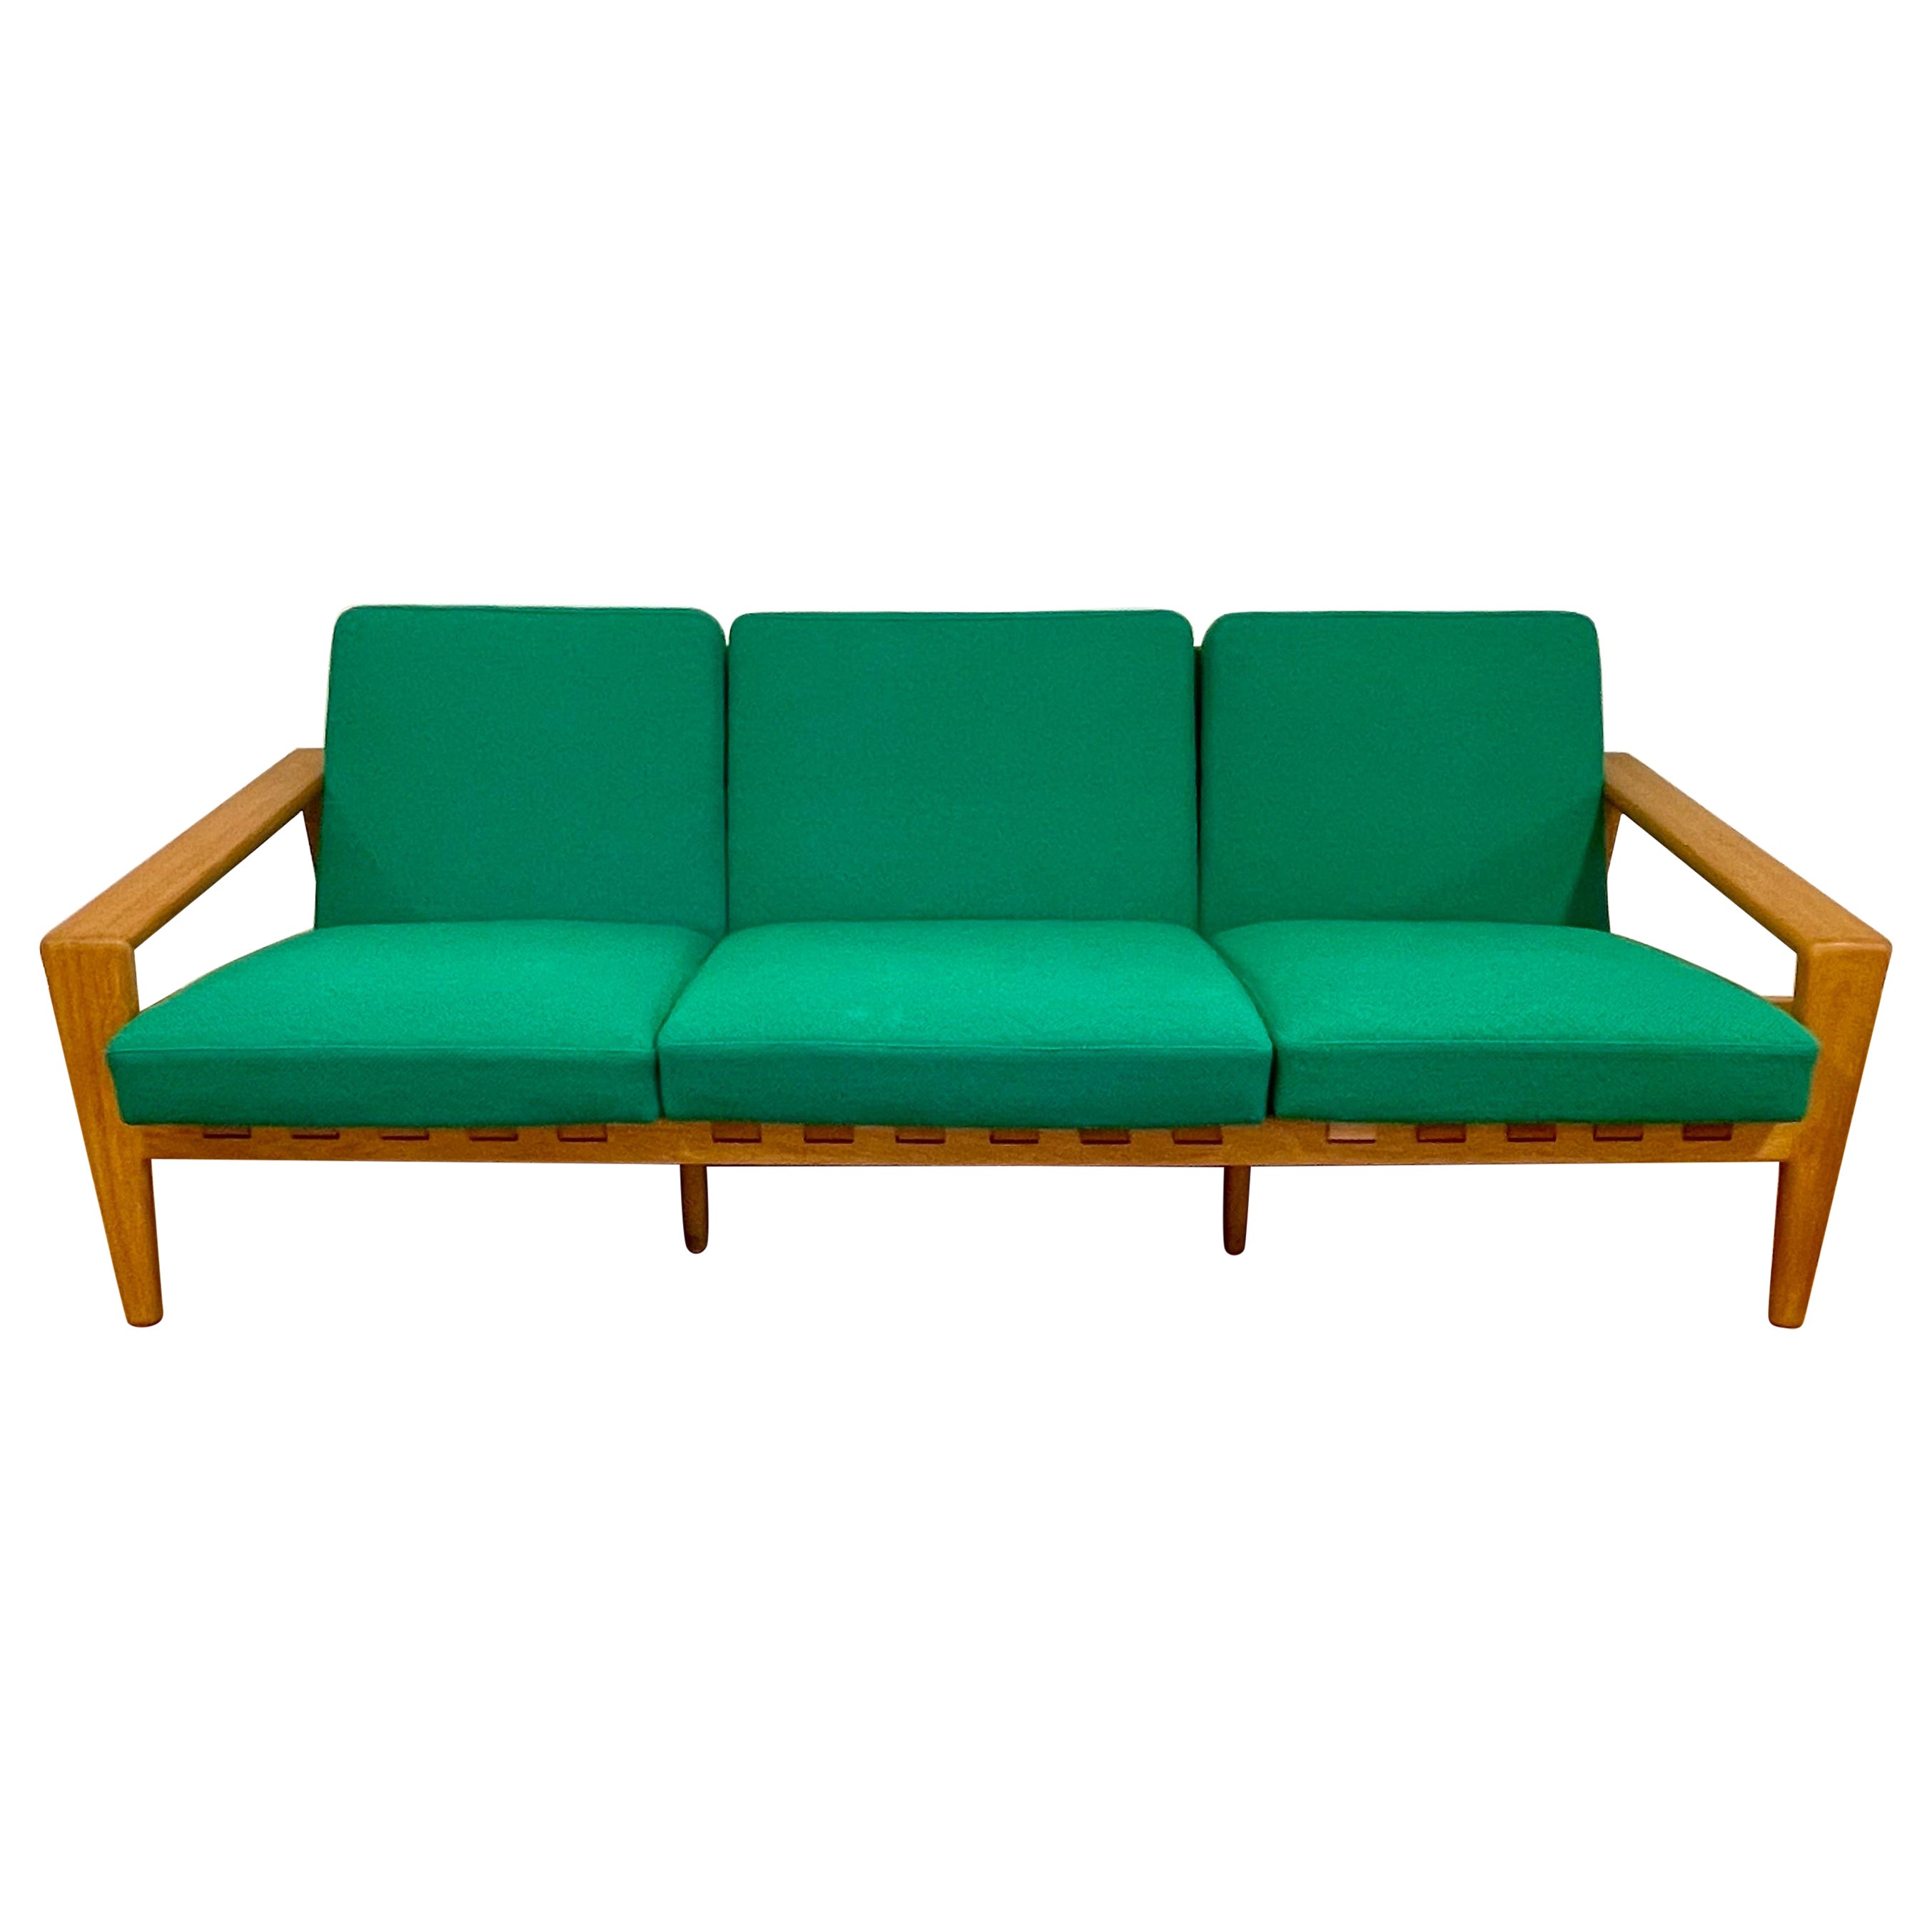 1960s Swedish Modern 3-seat Sofa “Bodö” by Svante Skogh for Hjertquist & Co